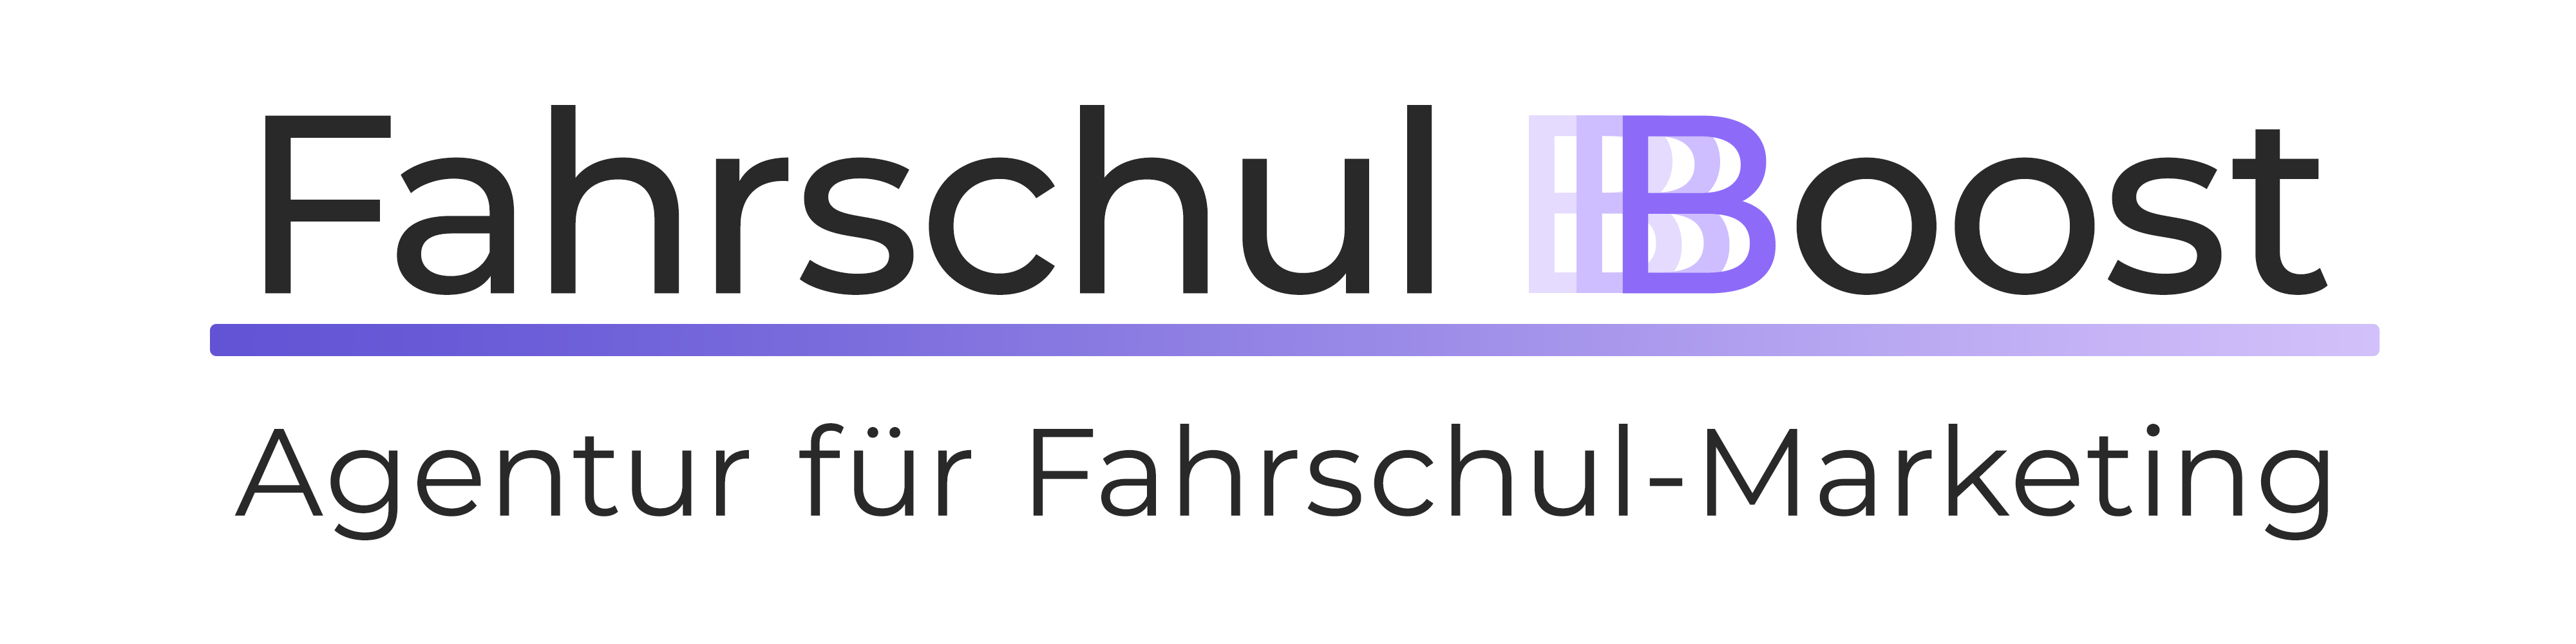 Fahrschul-Boost_Logo Agentur für Fahrschul-Marketing